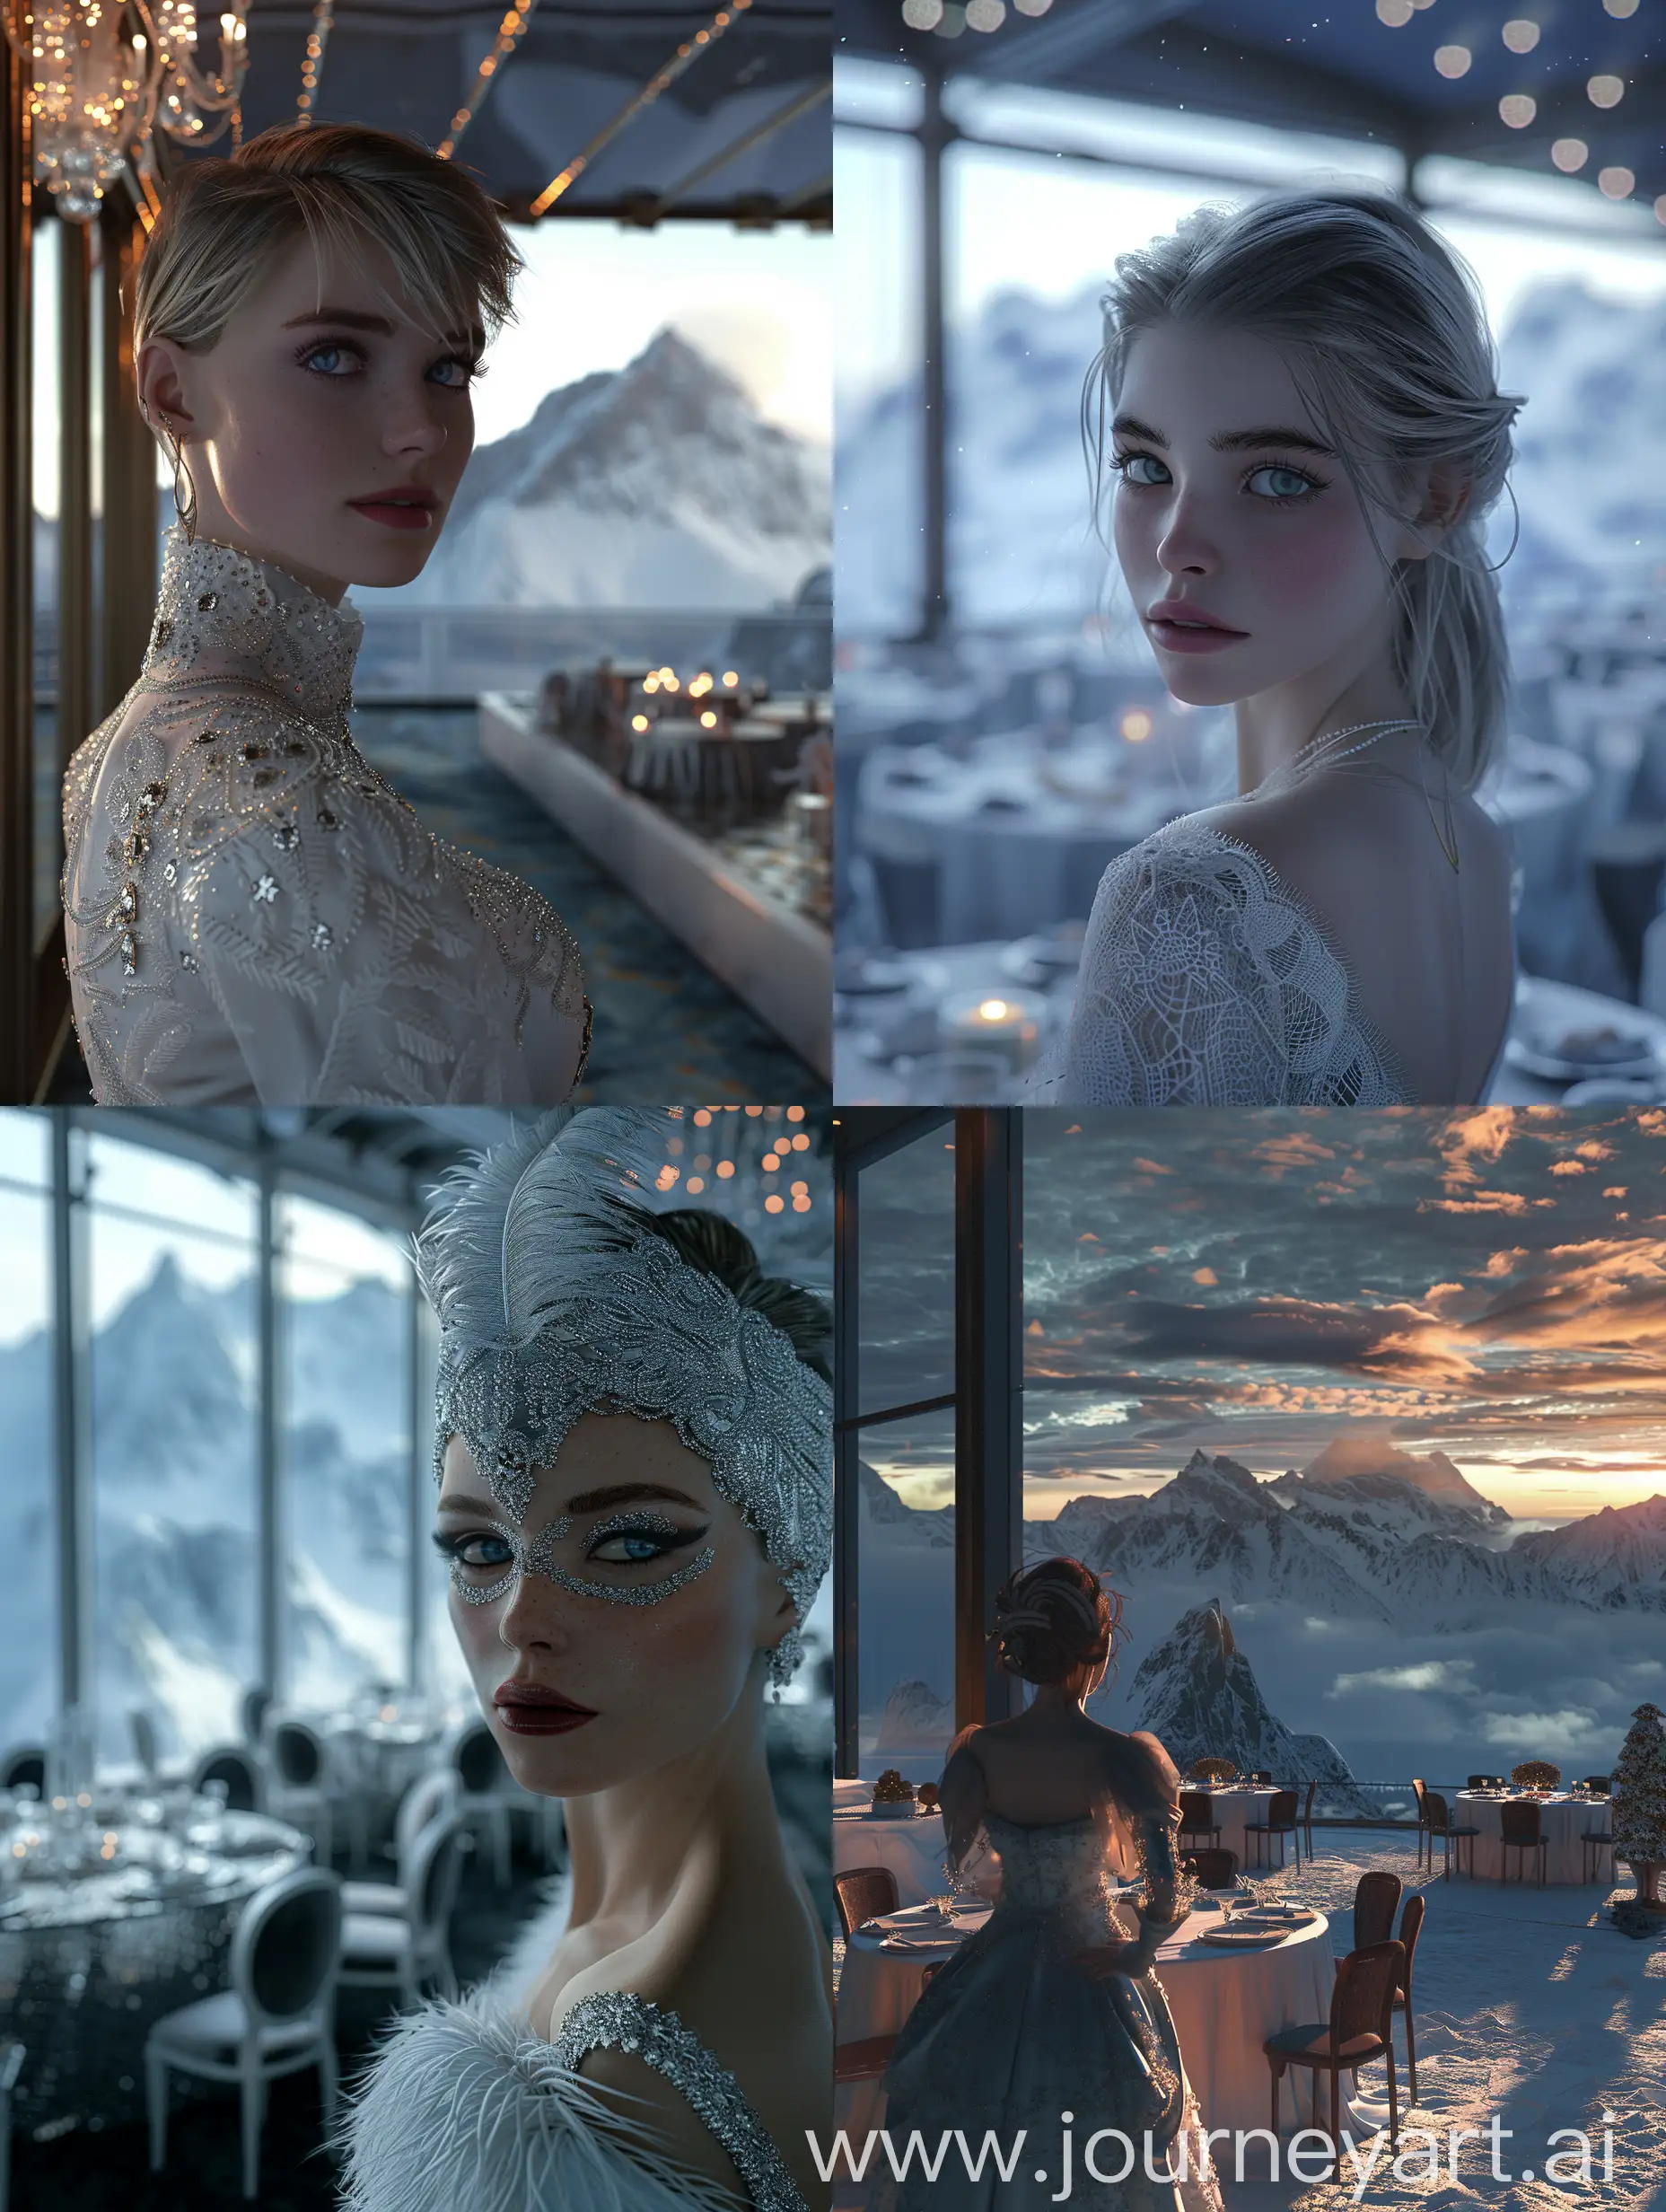 Dramatic-Mountain-Peak-Ballroom-Scene-North-Pole-Fantasy-CG-Wallpaper